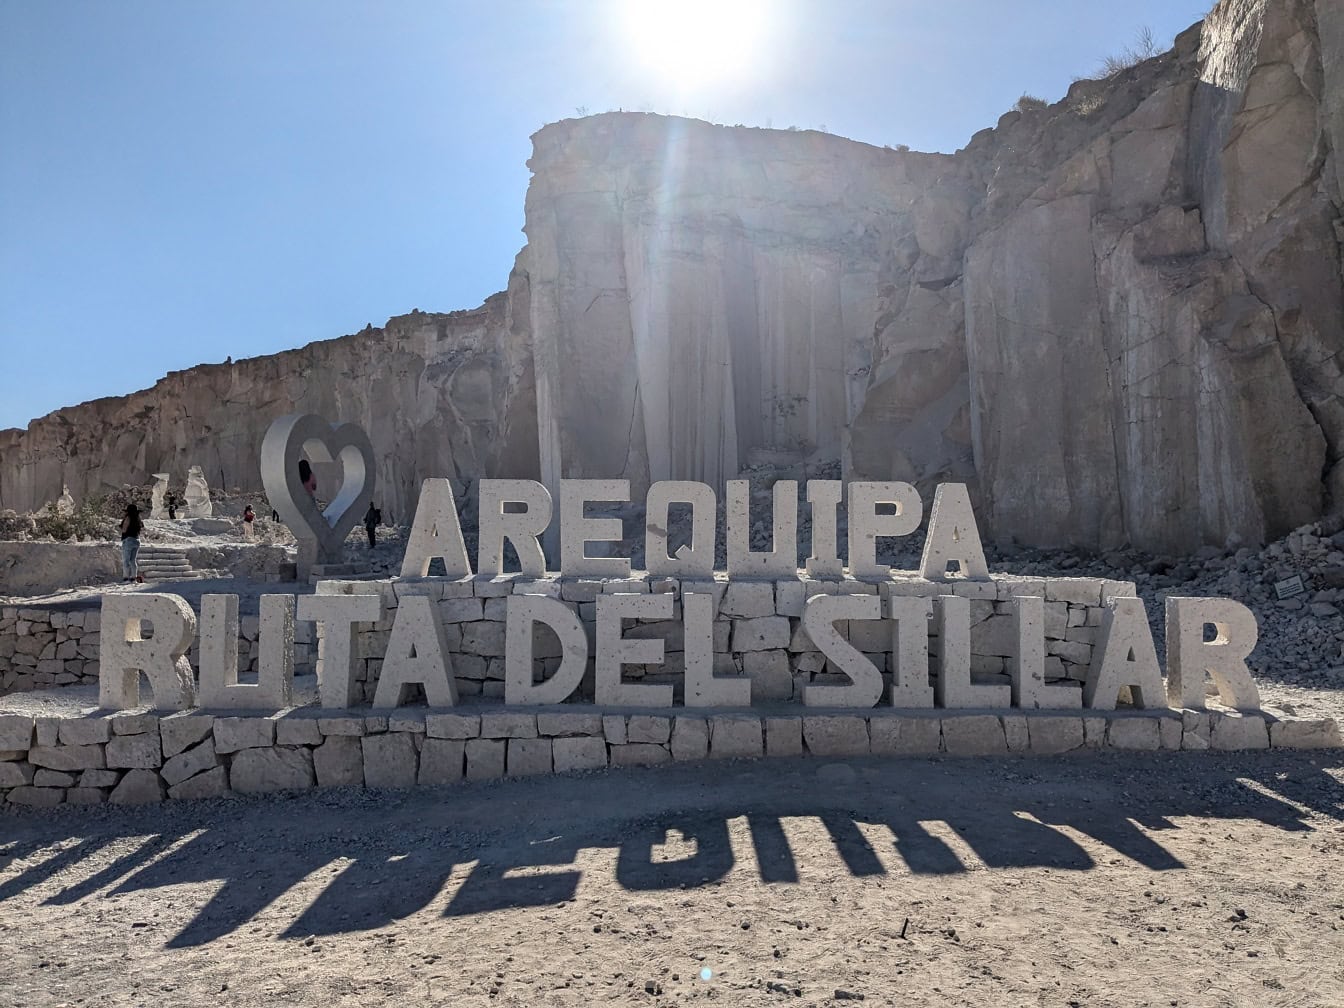 Stort steinskilt i Peru med inskripsjon av Arequipa Ruta Del Sillar